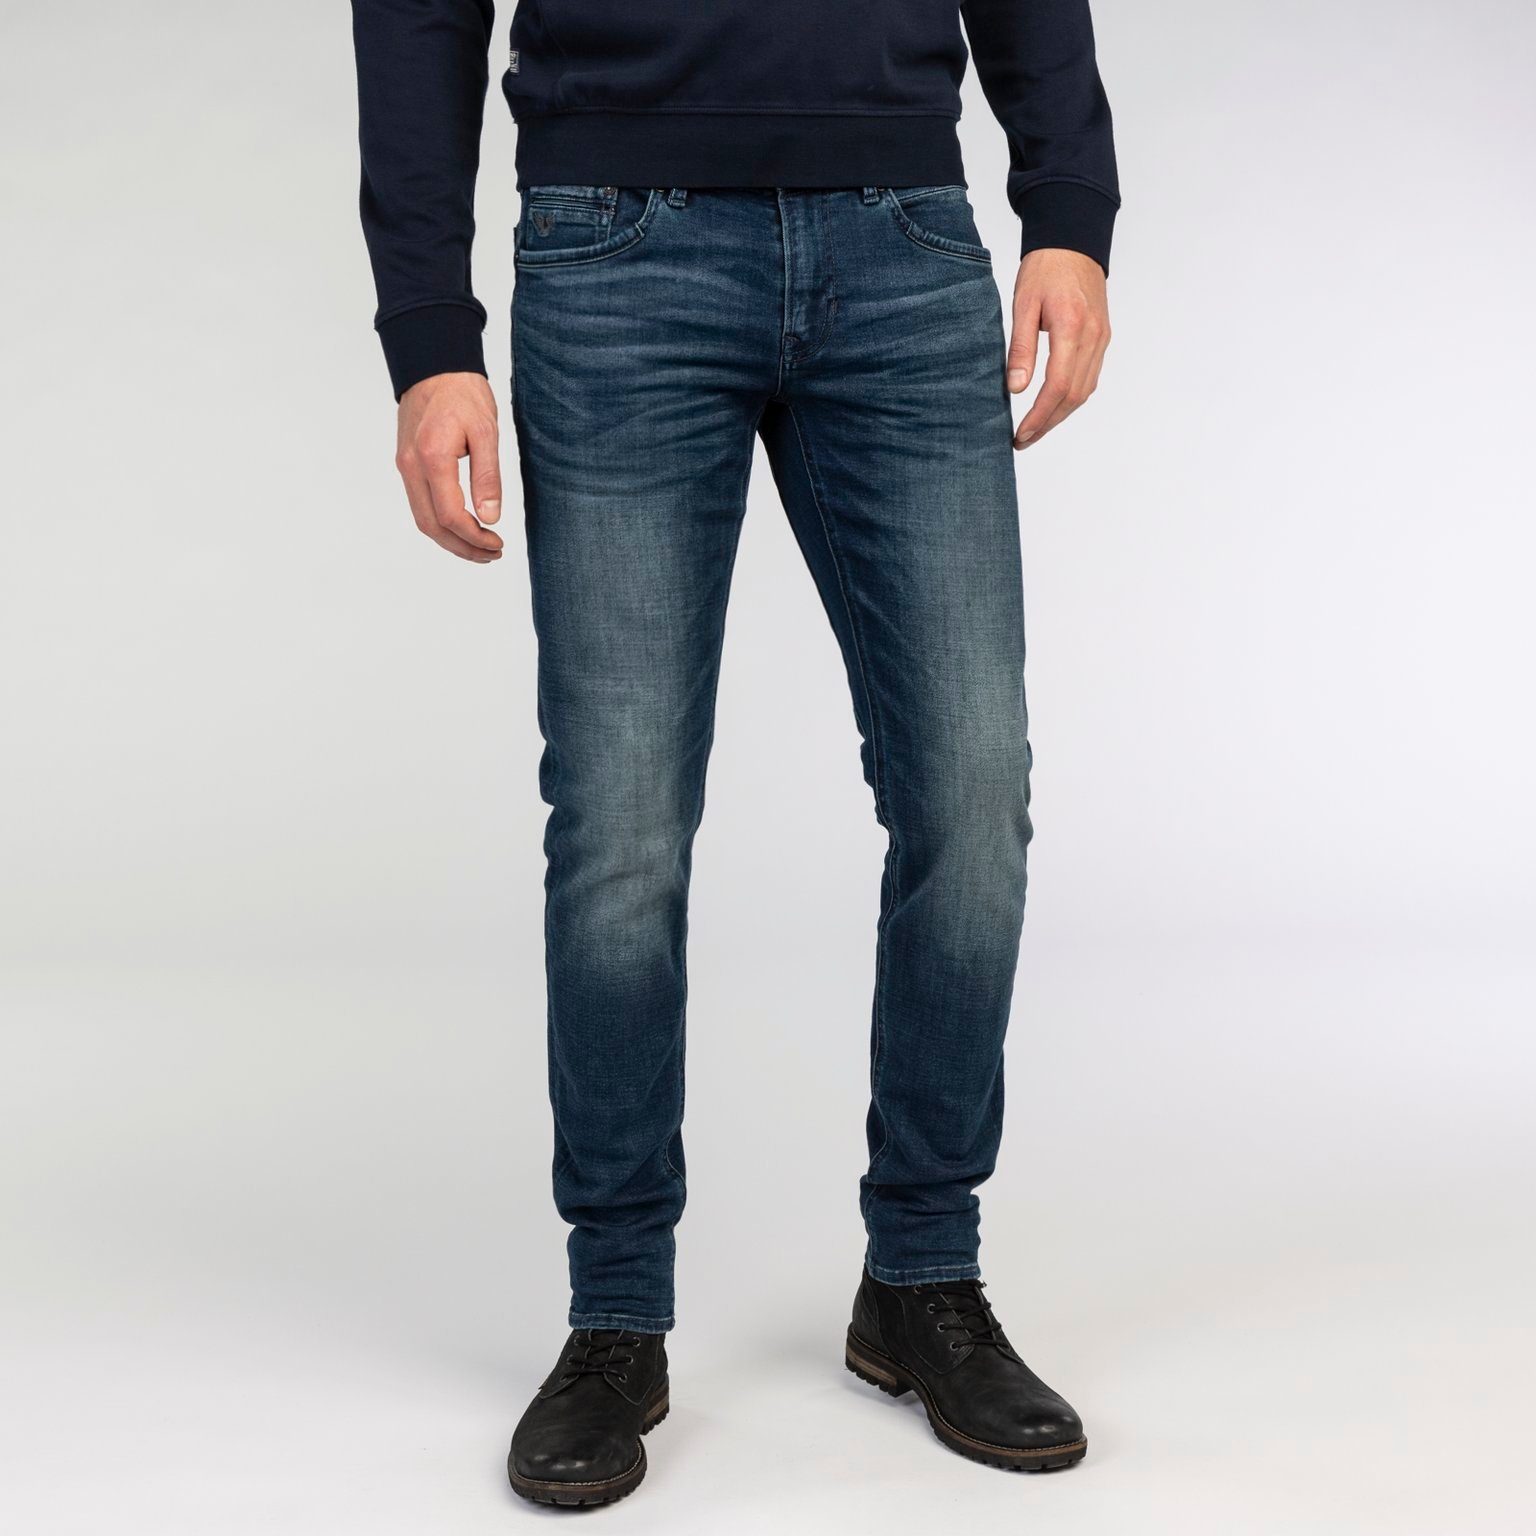 LEGEND PME dark PTR140-DBI TAILWHEEL PME LEGEND indigo blue 5-Pocket-Jeans